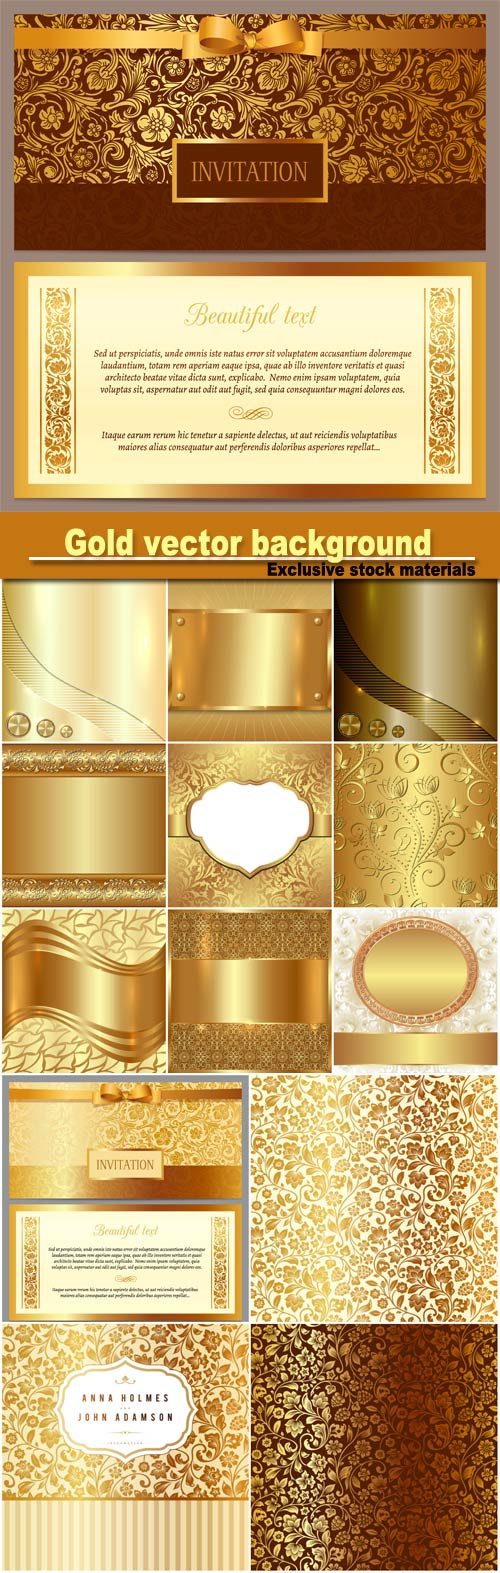 Gold vector background, wedding invitation